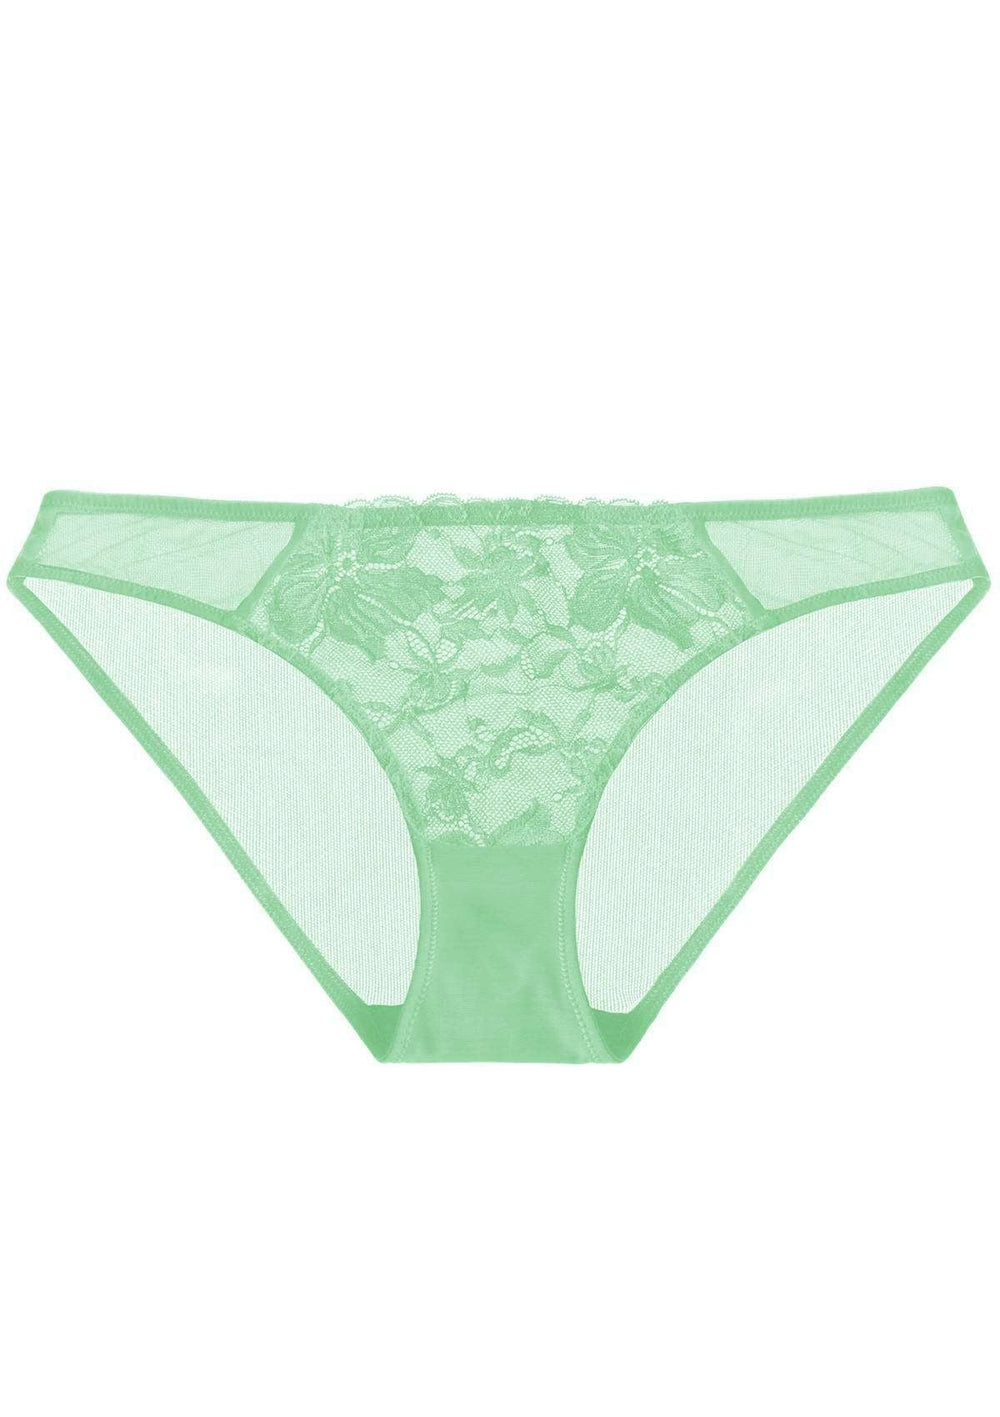 5 Pack Women's Panties Lace Bikini Underwear Moderate Coverage Multi-packs,  St-jf7, L